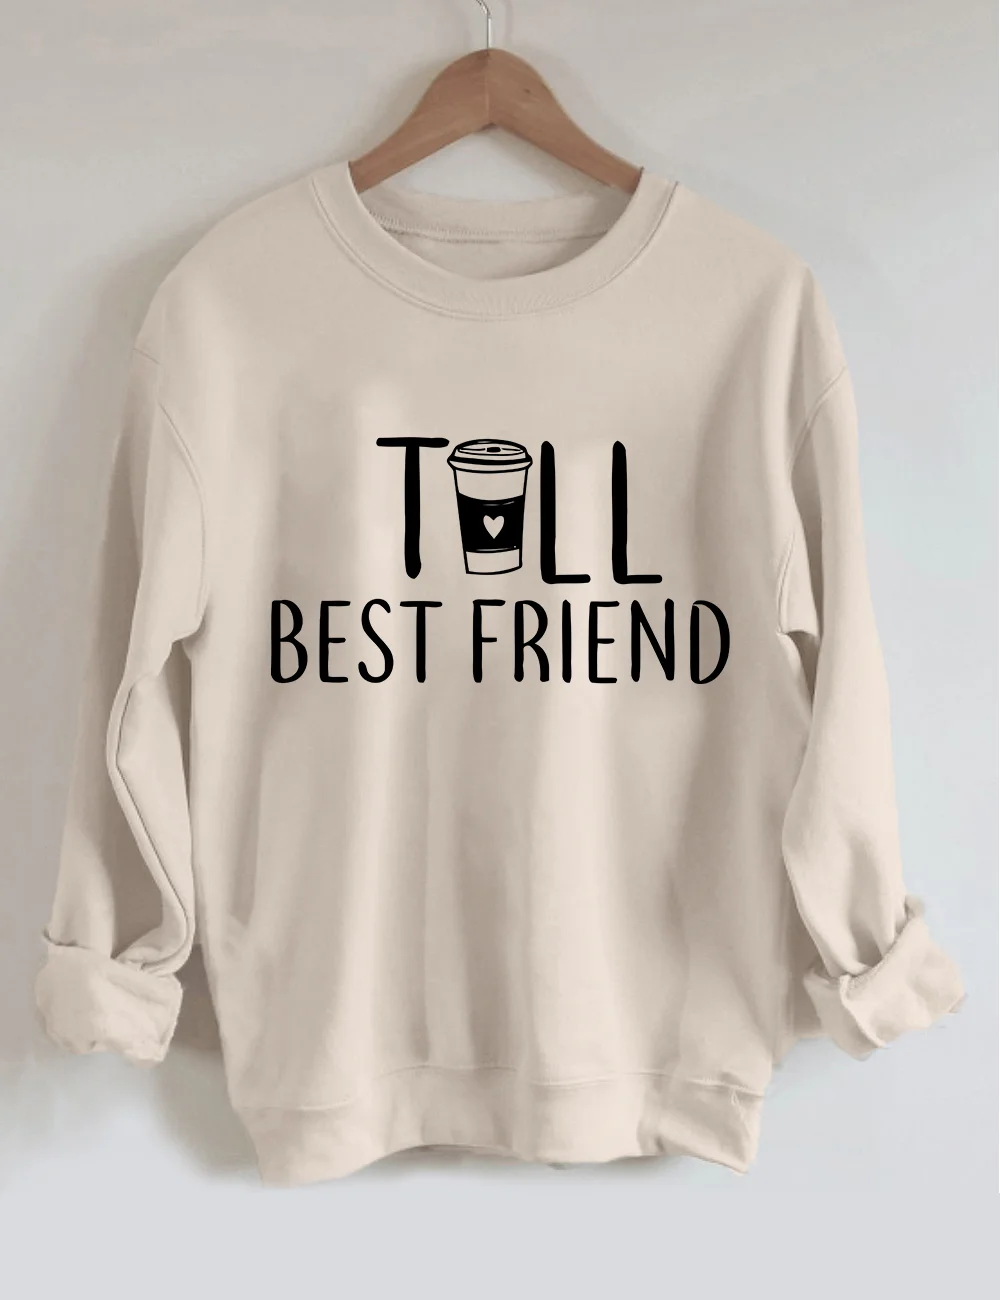 Tall/Short Best Friend Sweatshirt